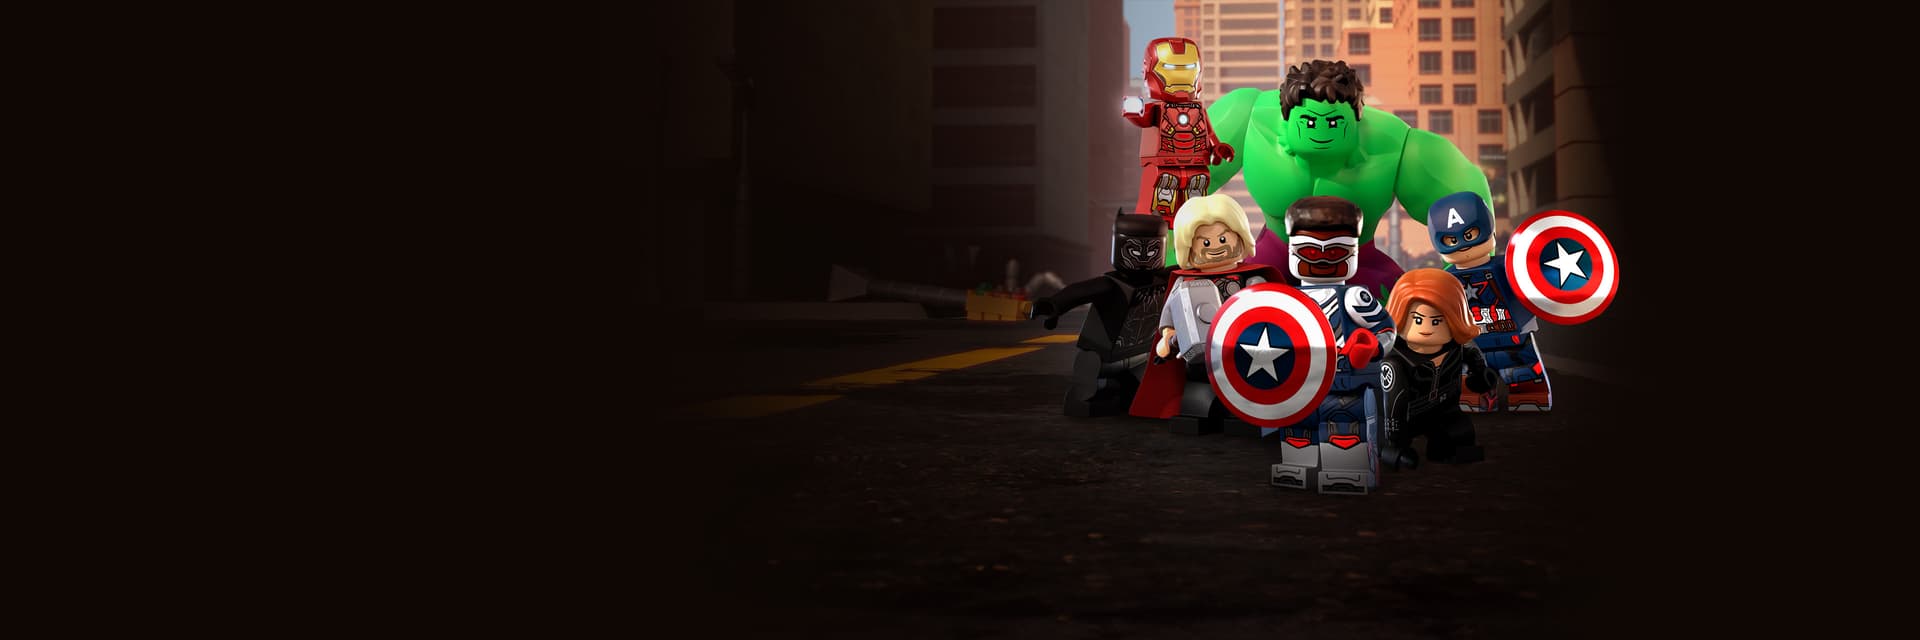 LEGO Marvel Avengers: Code Red Disney+ Disney Plus TV Show Season 1 Poster